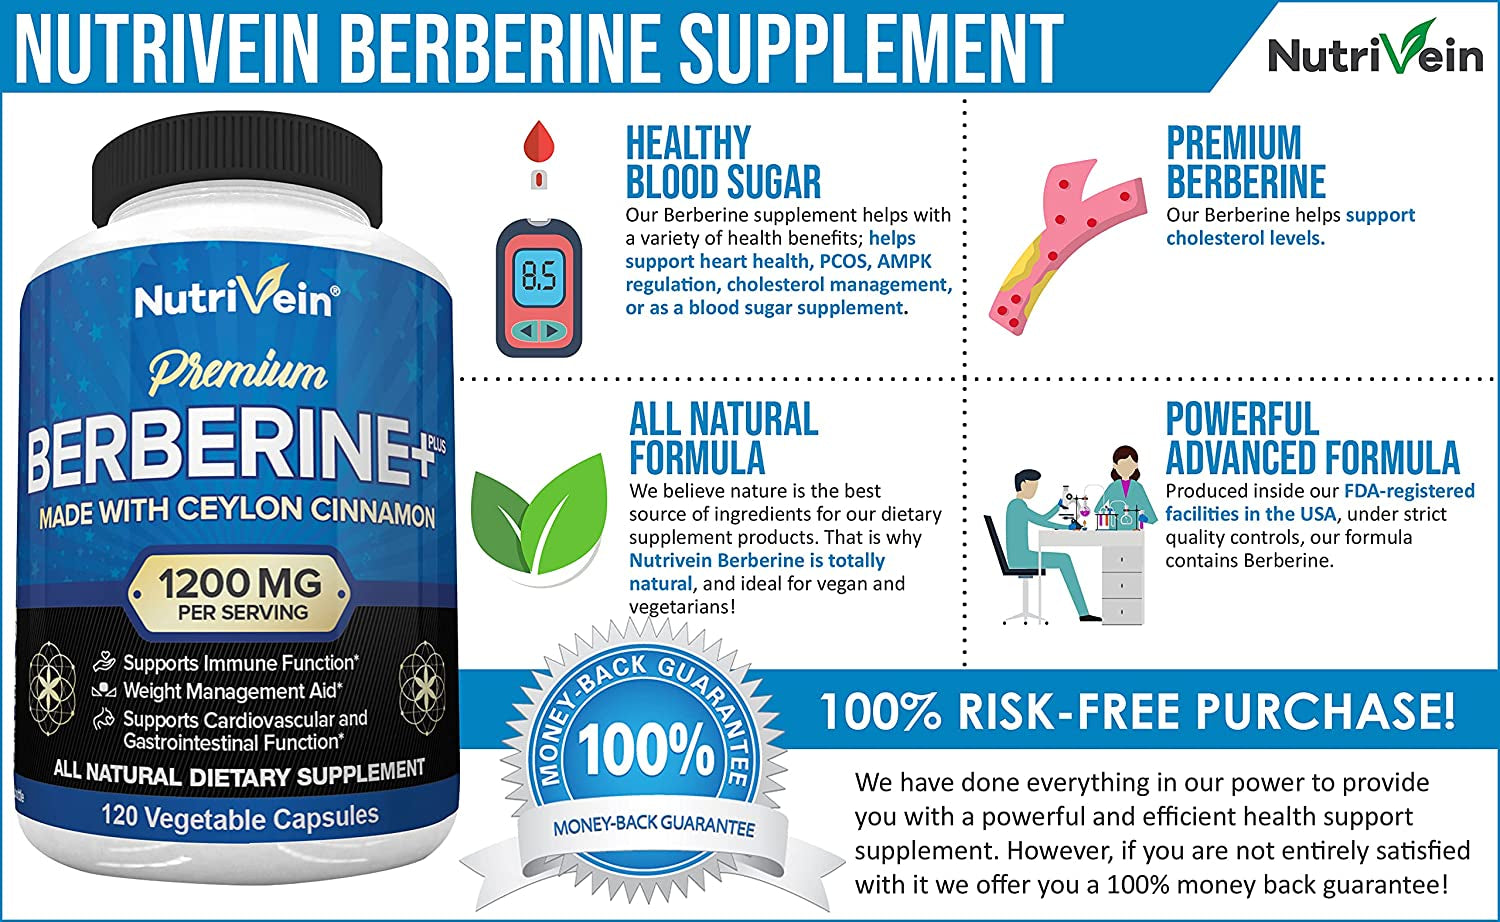 Nutrivein Premium Berberine HCL 1200Mg plus Organic Ceylon Cinnamon - 120 Capsules - Supports Glucose Metabolism, Immune System, Weight Management - Berberine HCI Supplement